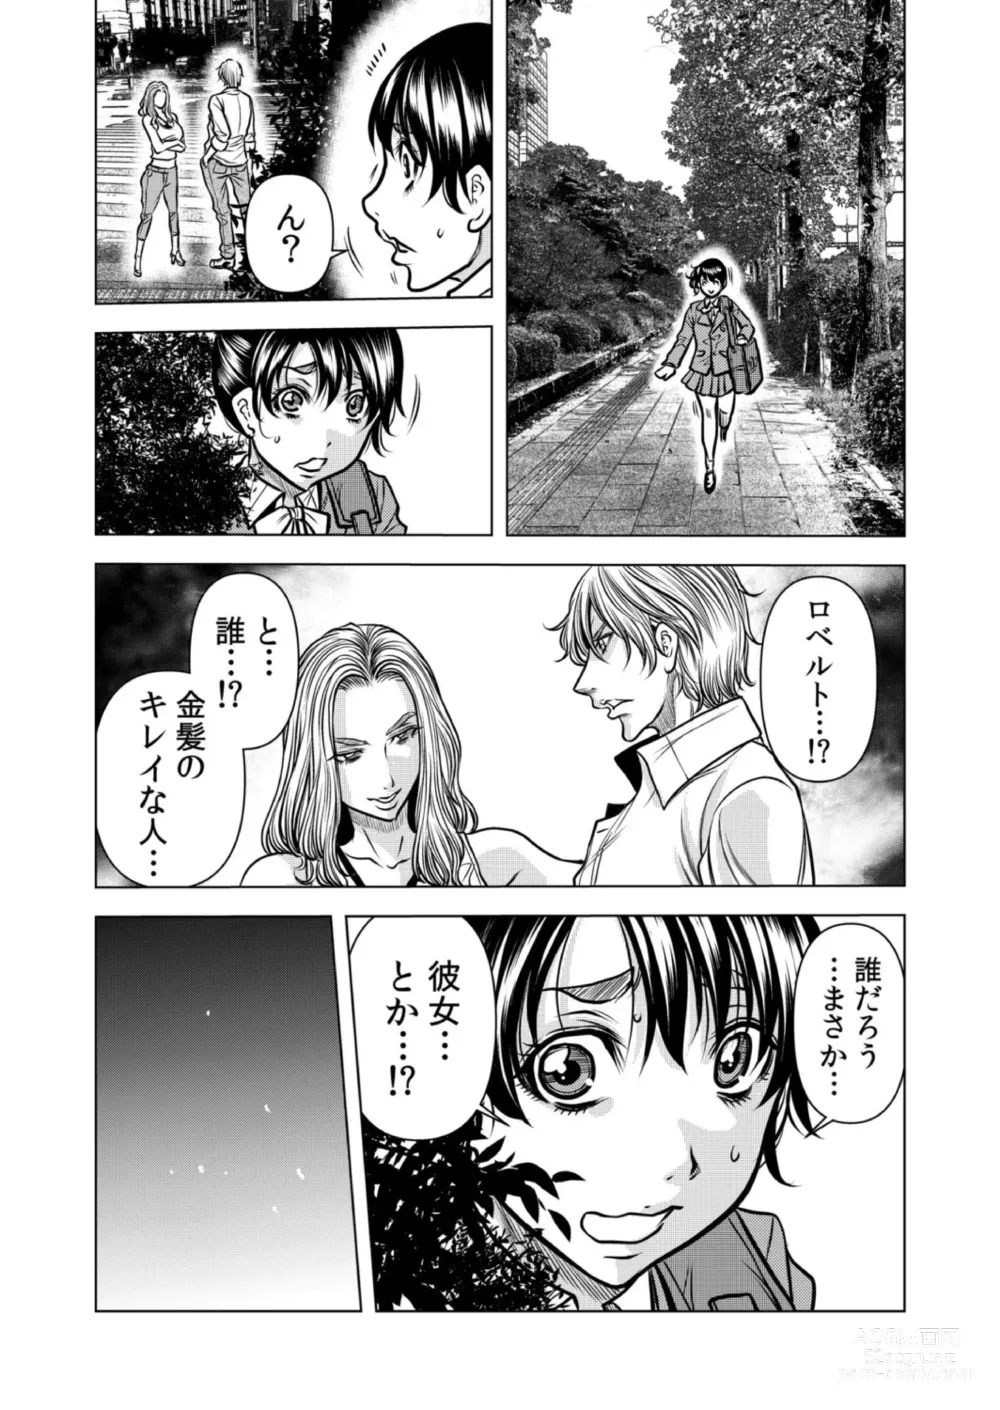 Page 73 of manga Mamasan,yobai ha OK desuka? VOL12